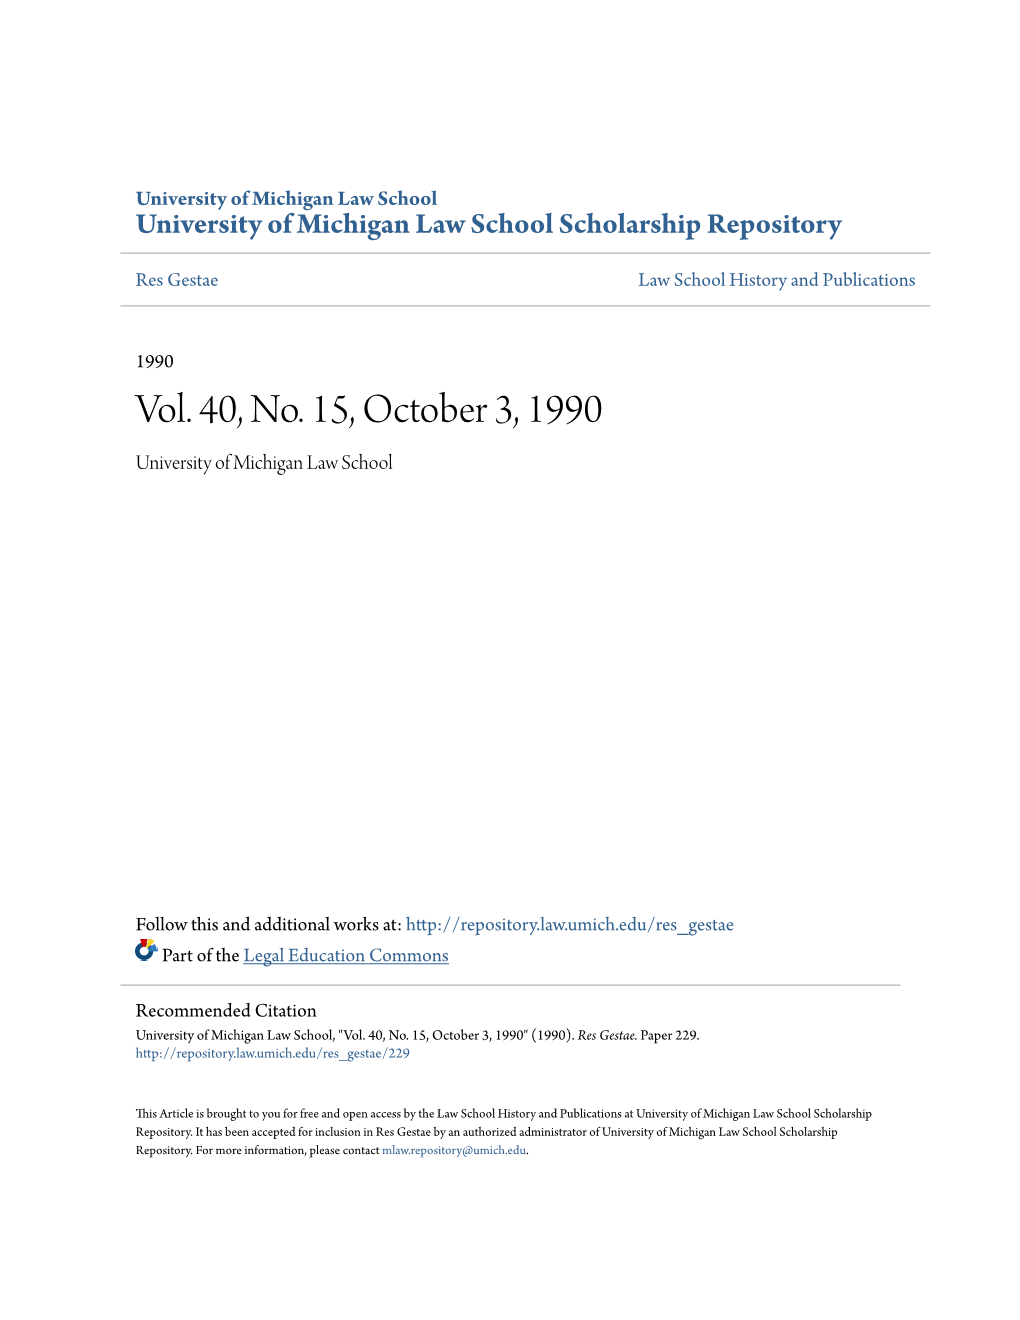 Vol. 40, No. 15, October 3, 1990 University of Michigan Law School